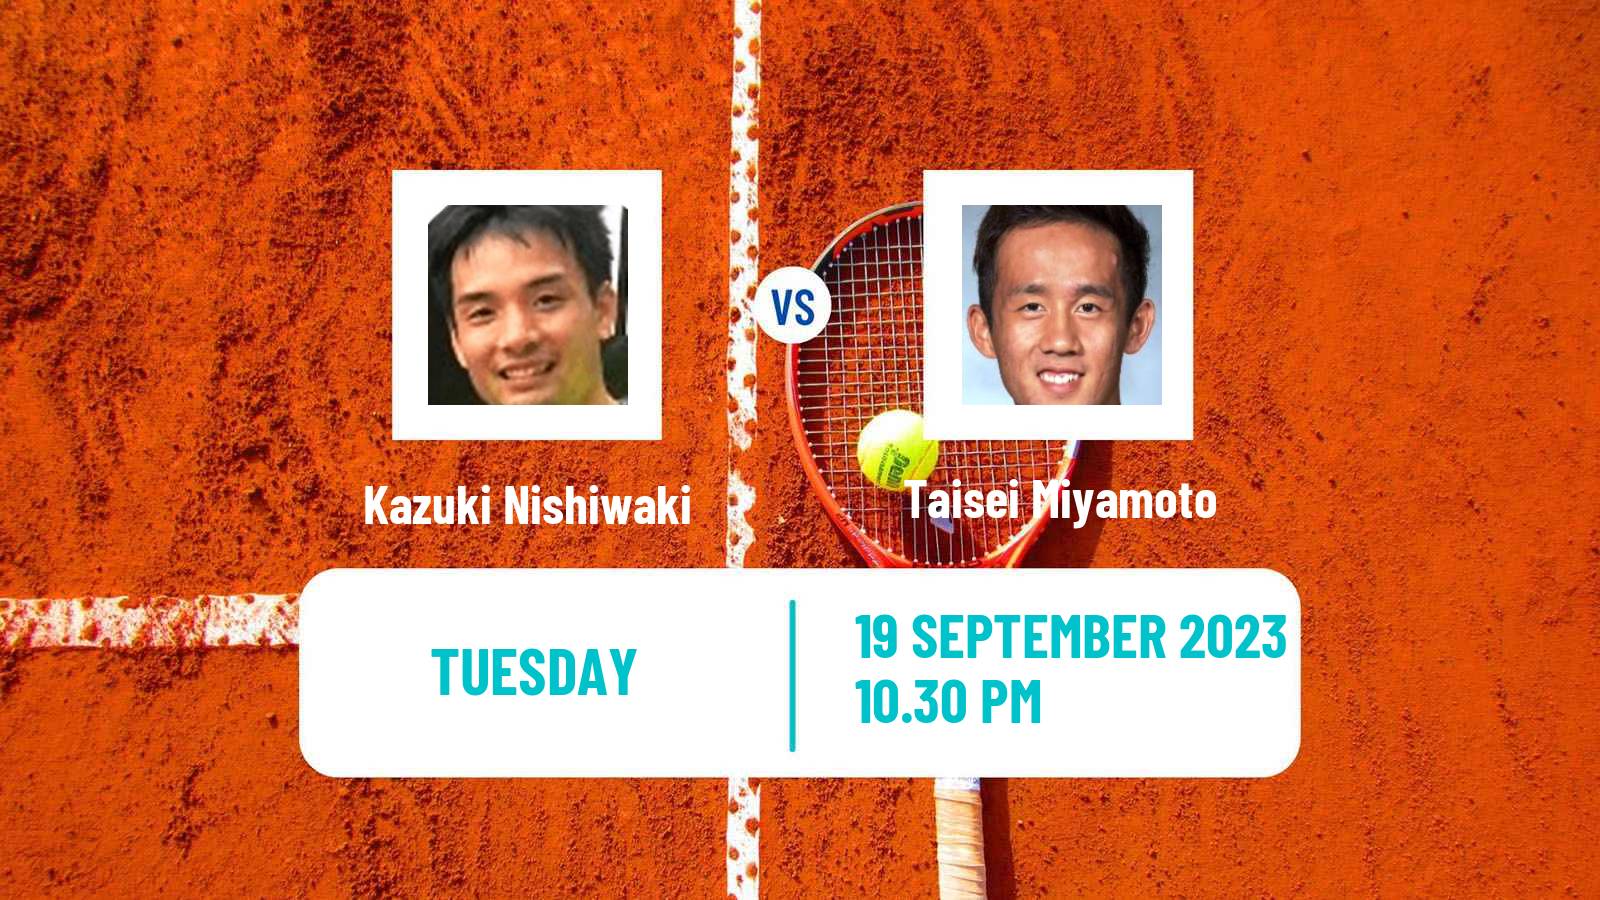 Tennis ITF M25 Takasaki Men Kazuki Nishiwaki - Taisei Miyamoto